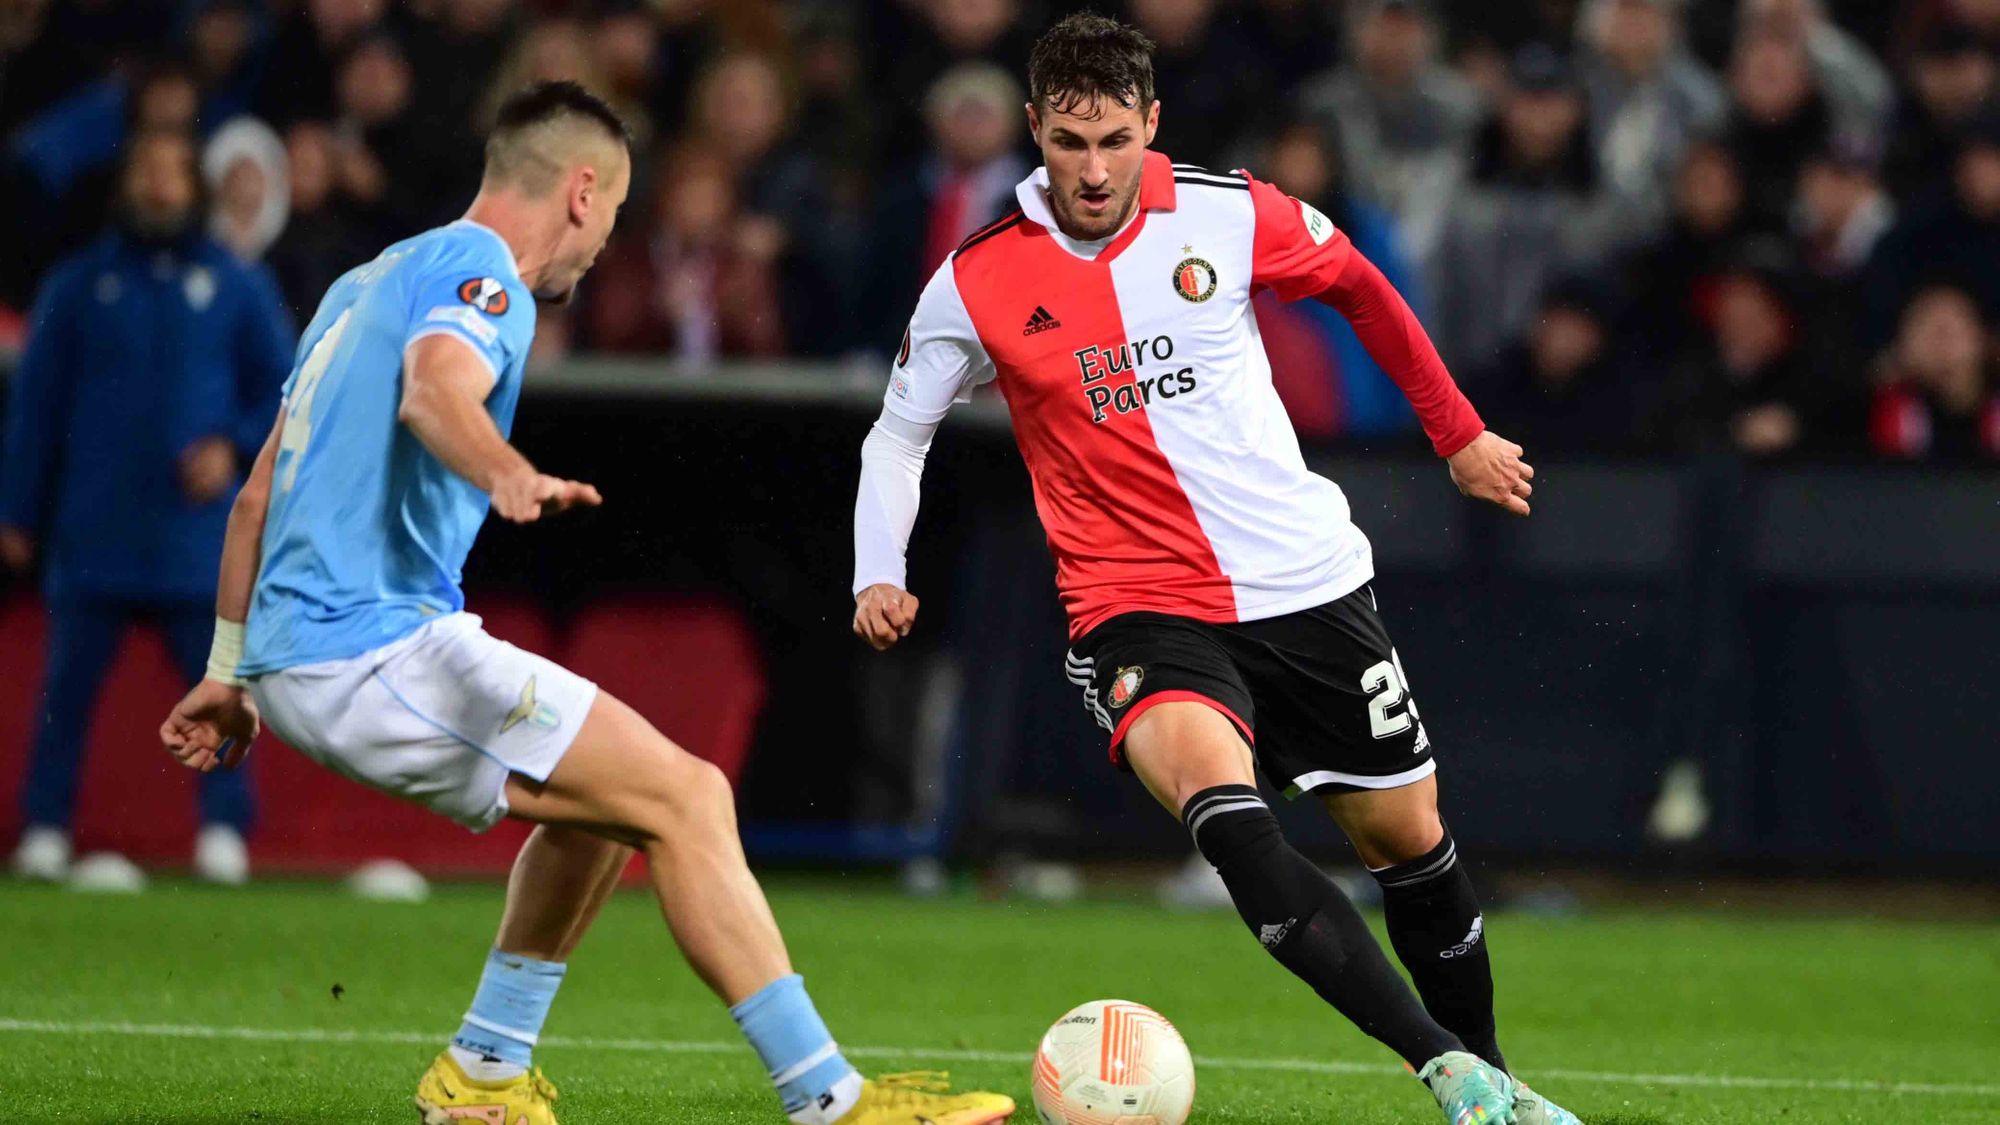 Santiago Giménez clasifica a Feyenoord a octavos de final de la Europa League